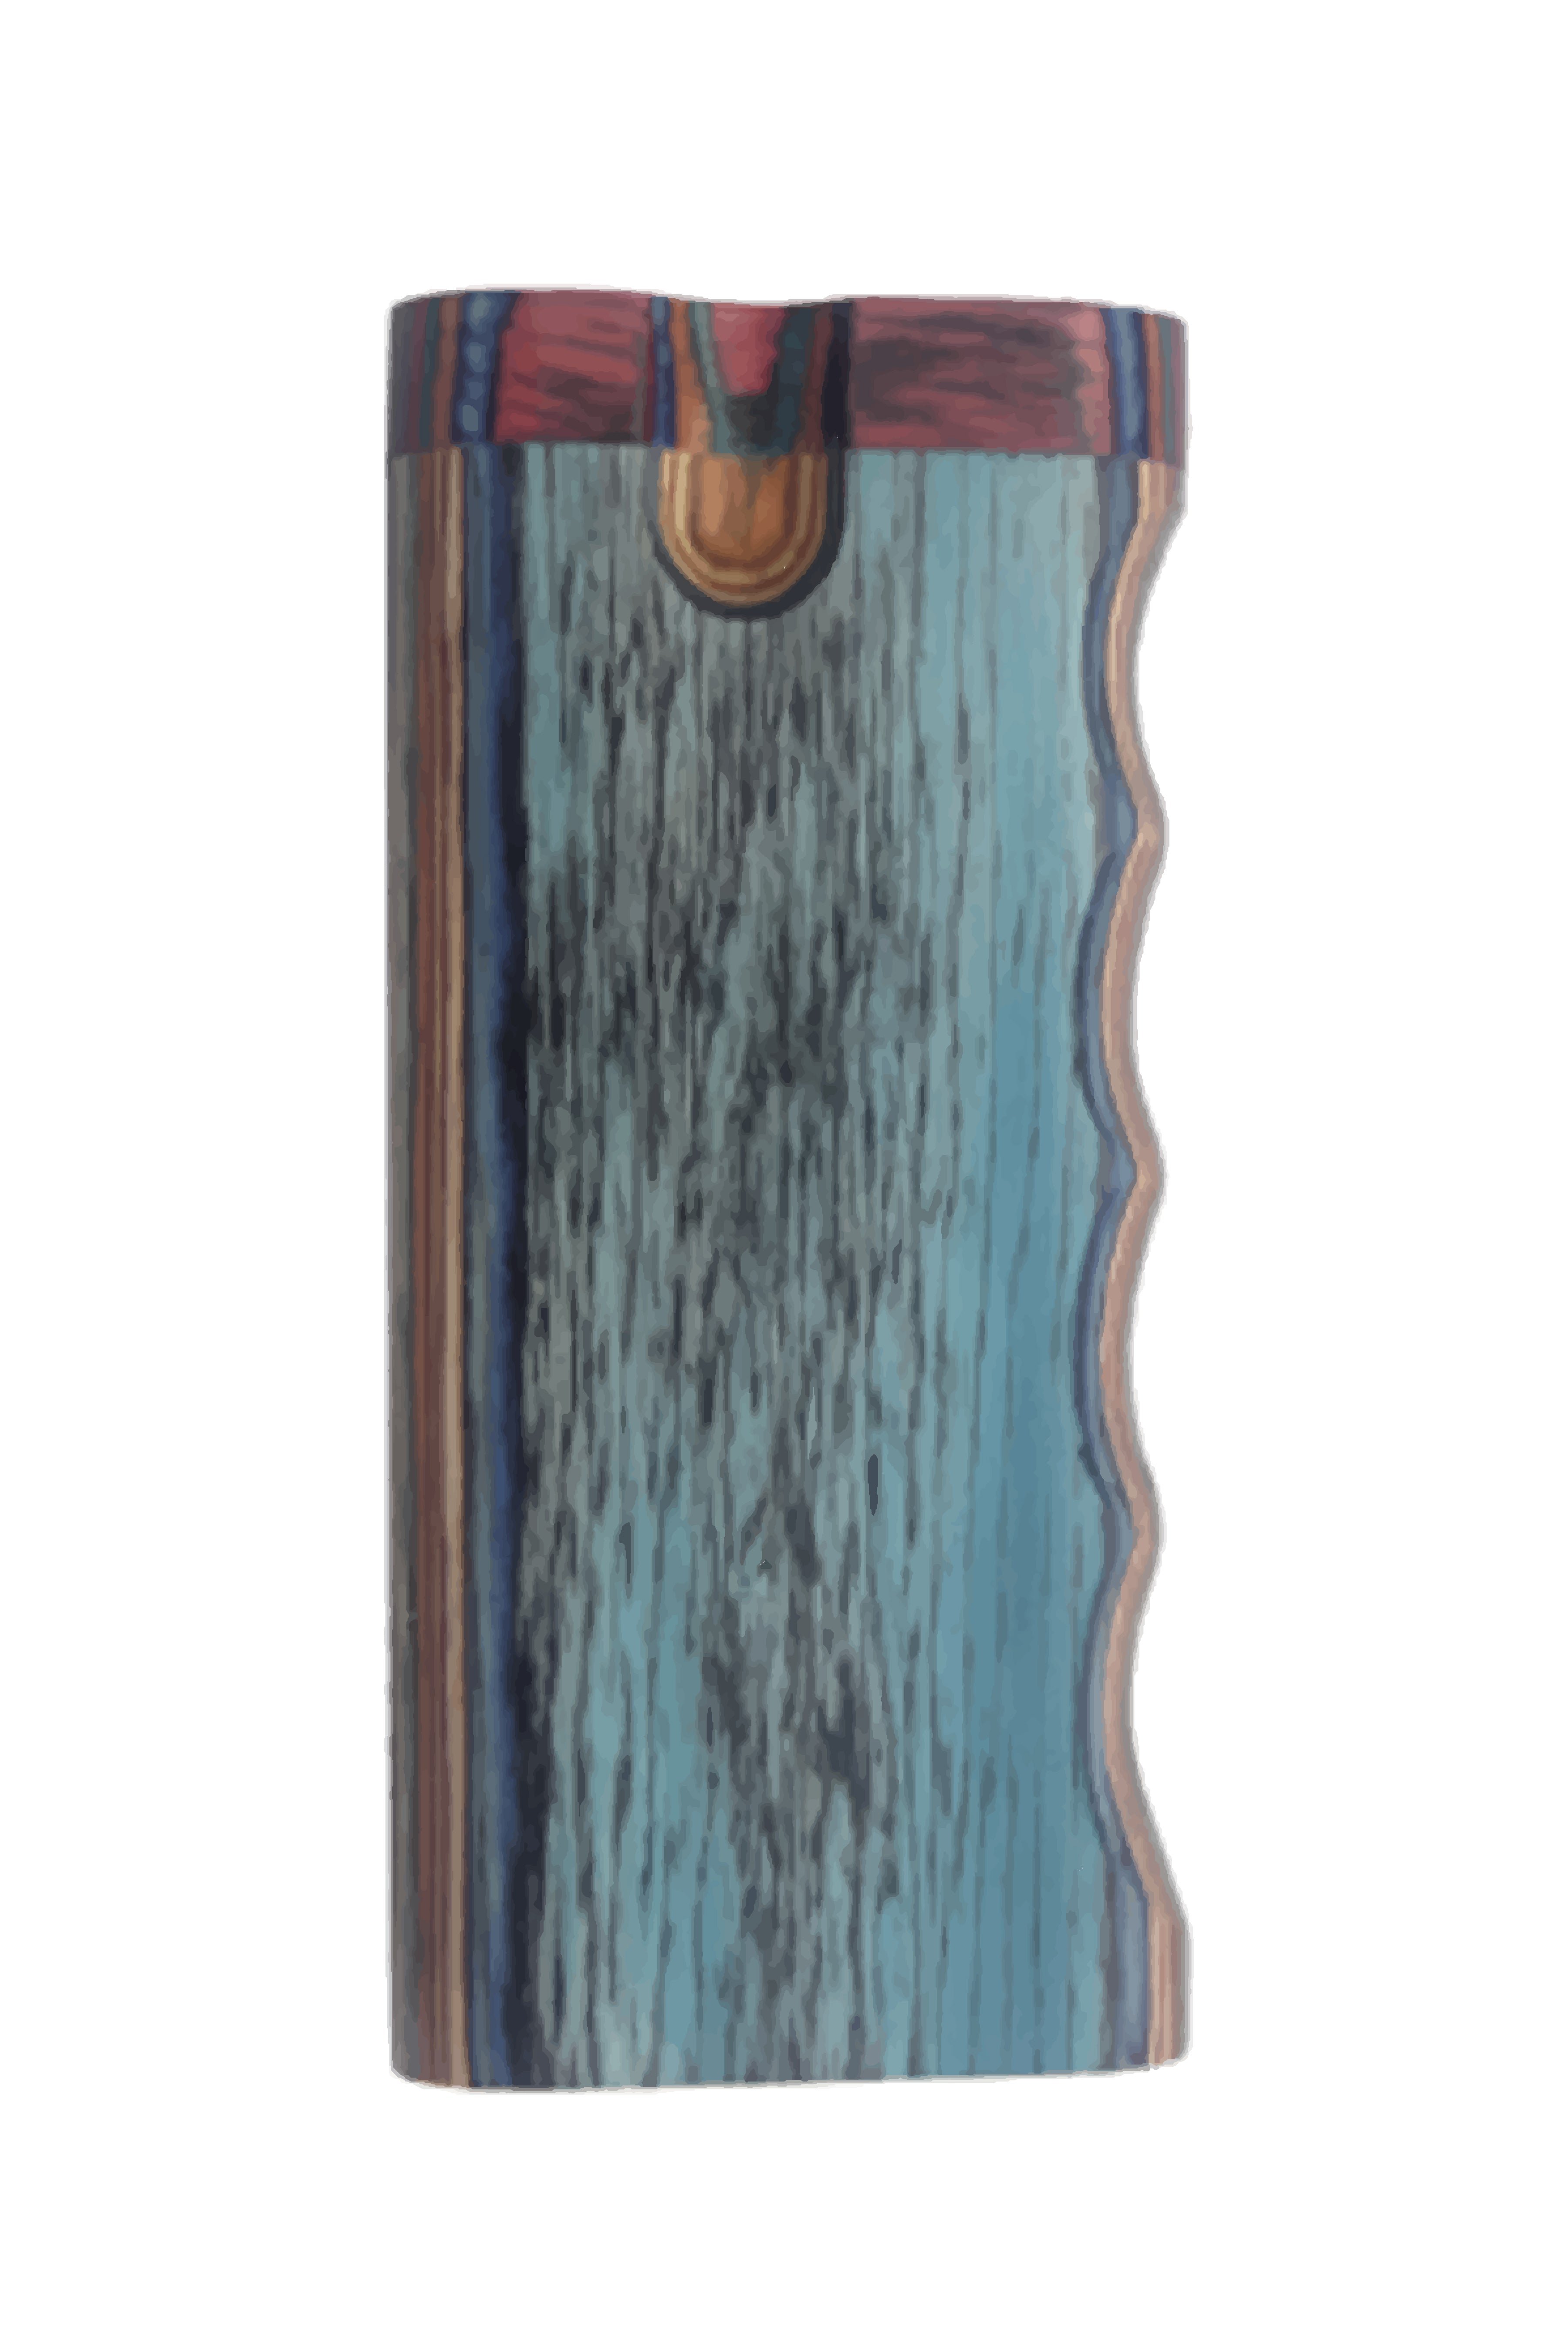 Wooden Dugout RAINBOW LG (Single Grip)